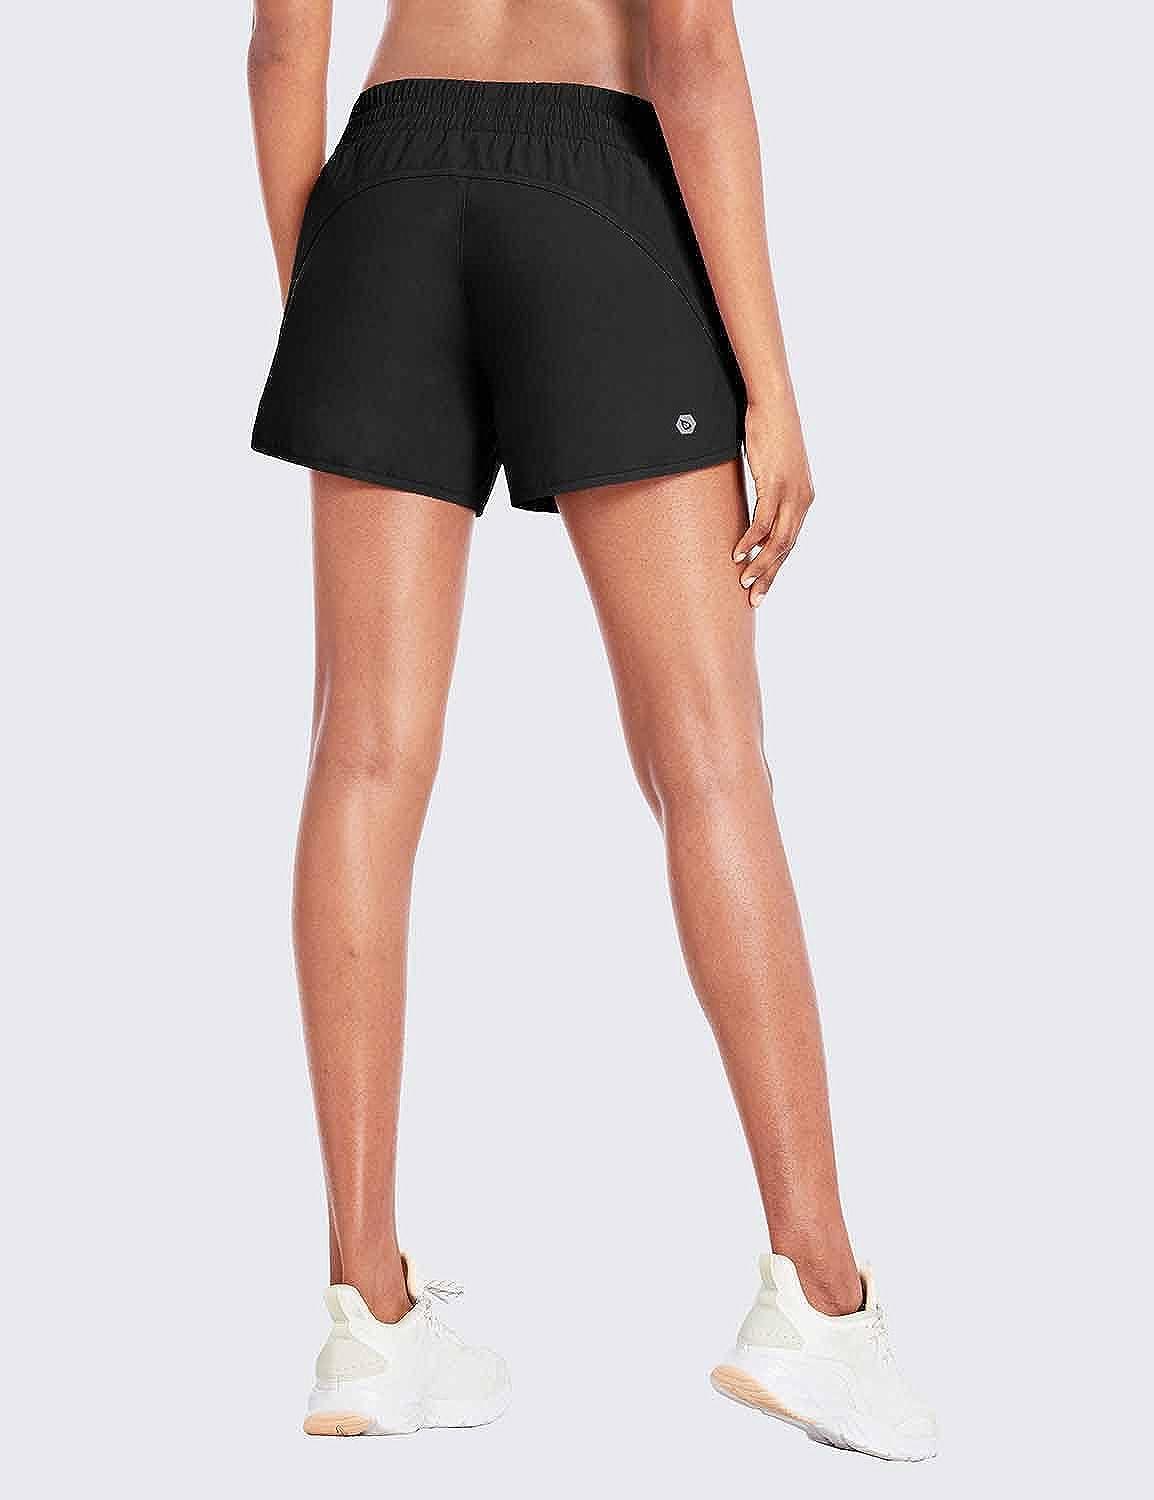 BALEAF Men's 2 in 1 Running Athletic Shorts 5 Quick Dry Workout Shorts  with Liner Zipper Pocket Black/Black Size S 